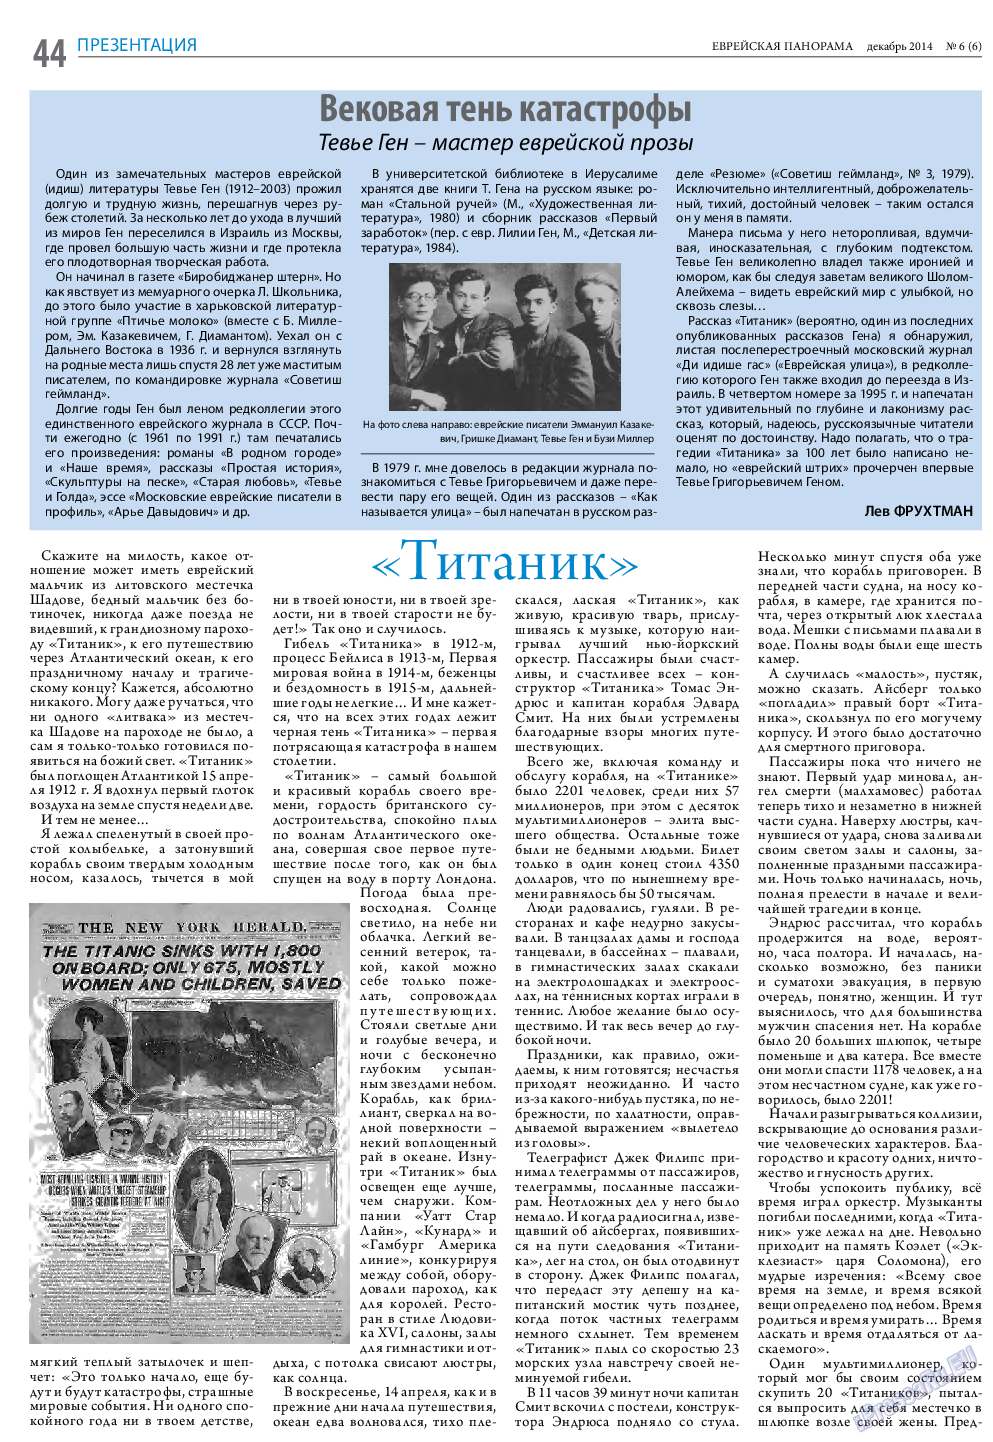 Еврейская панорама, газета. 2014 №6 стр.44